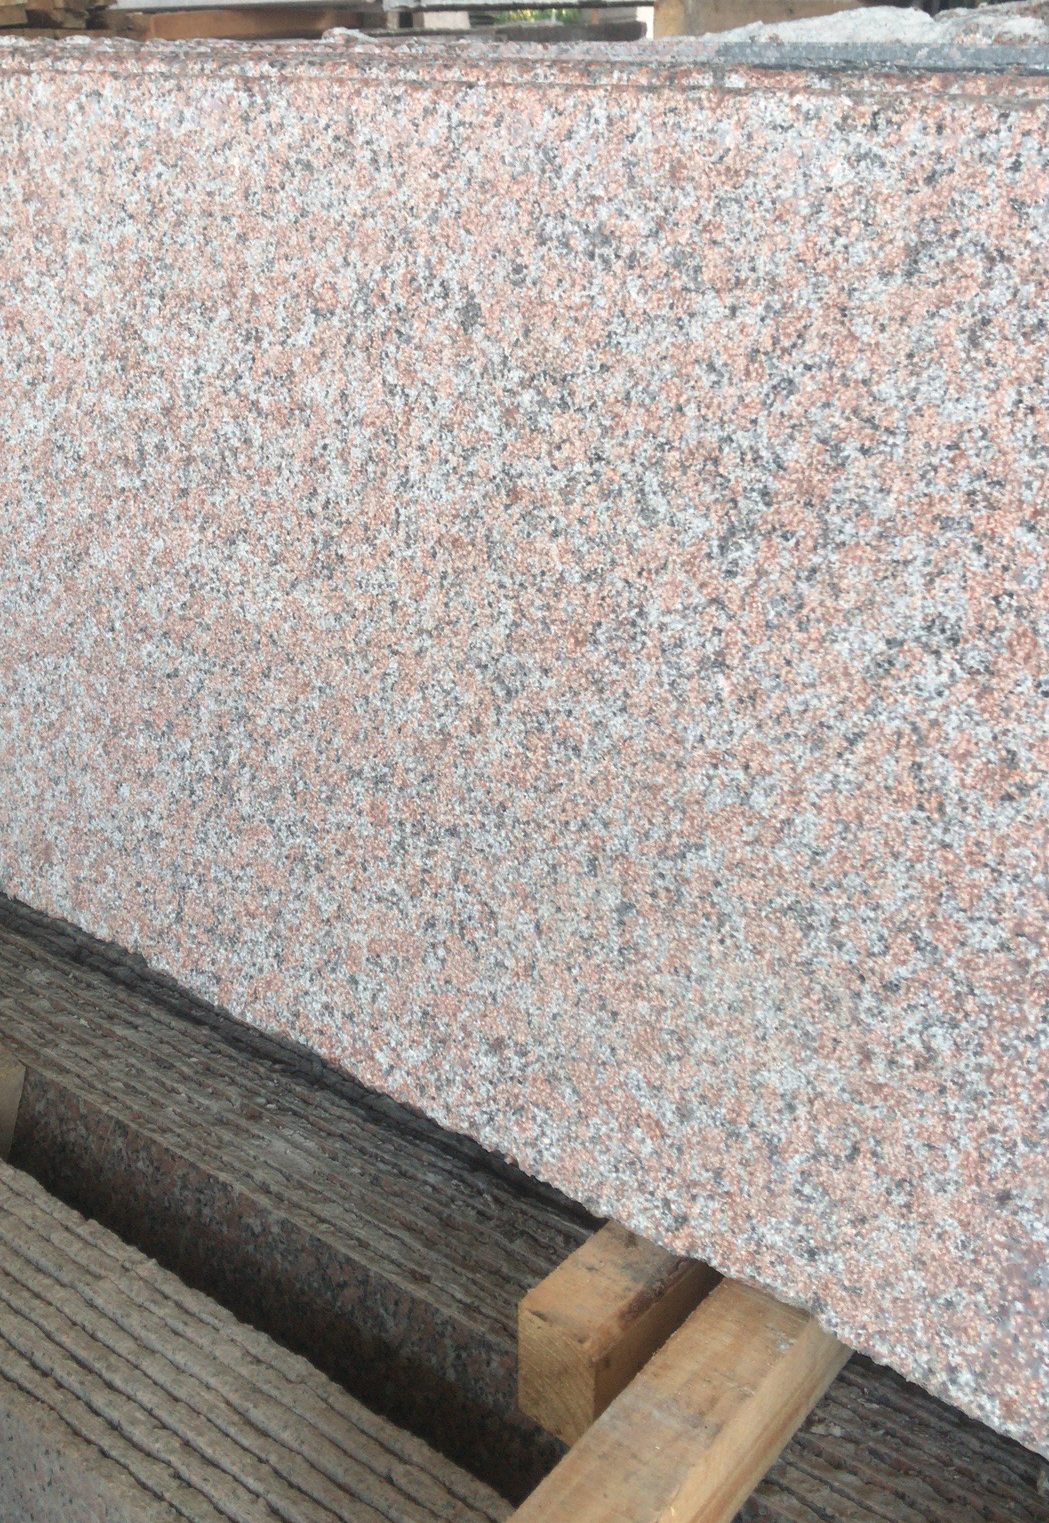 Red granite rough surface floor